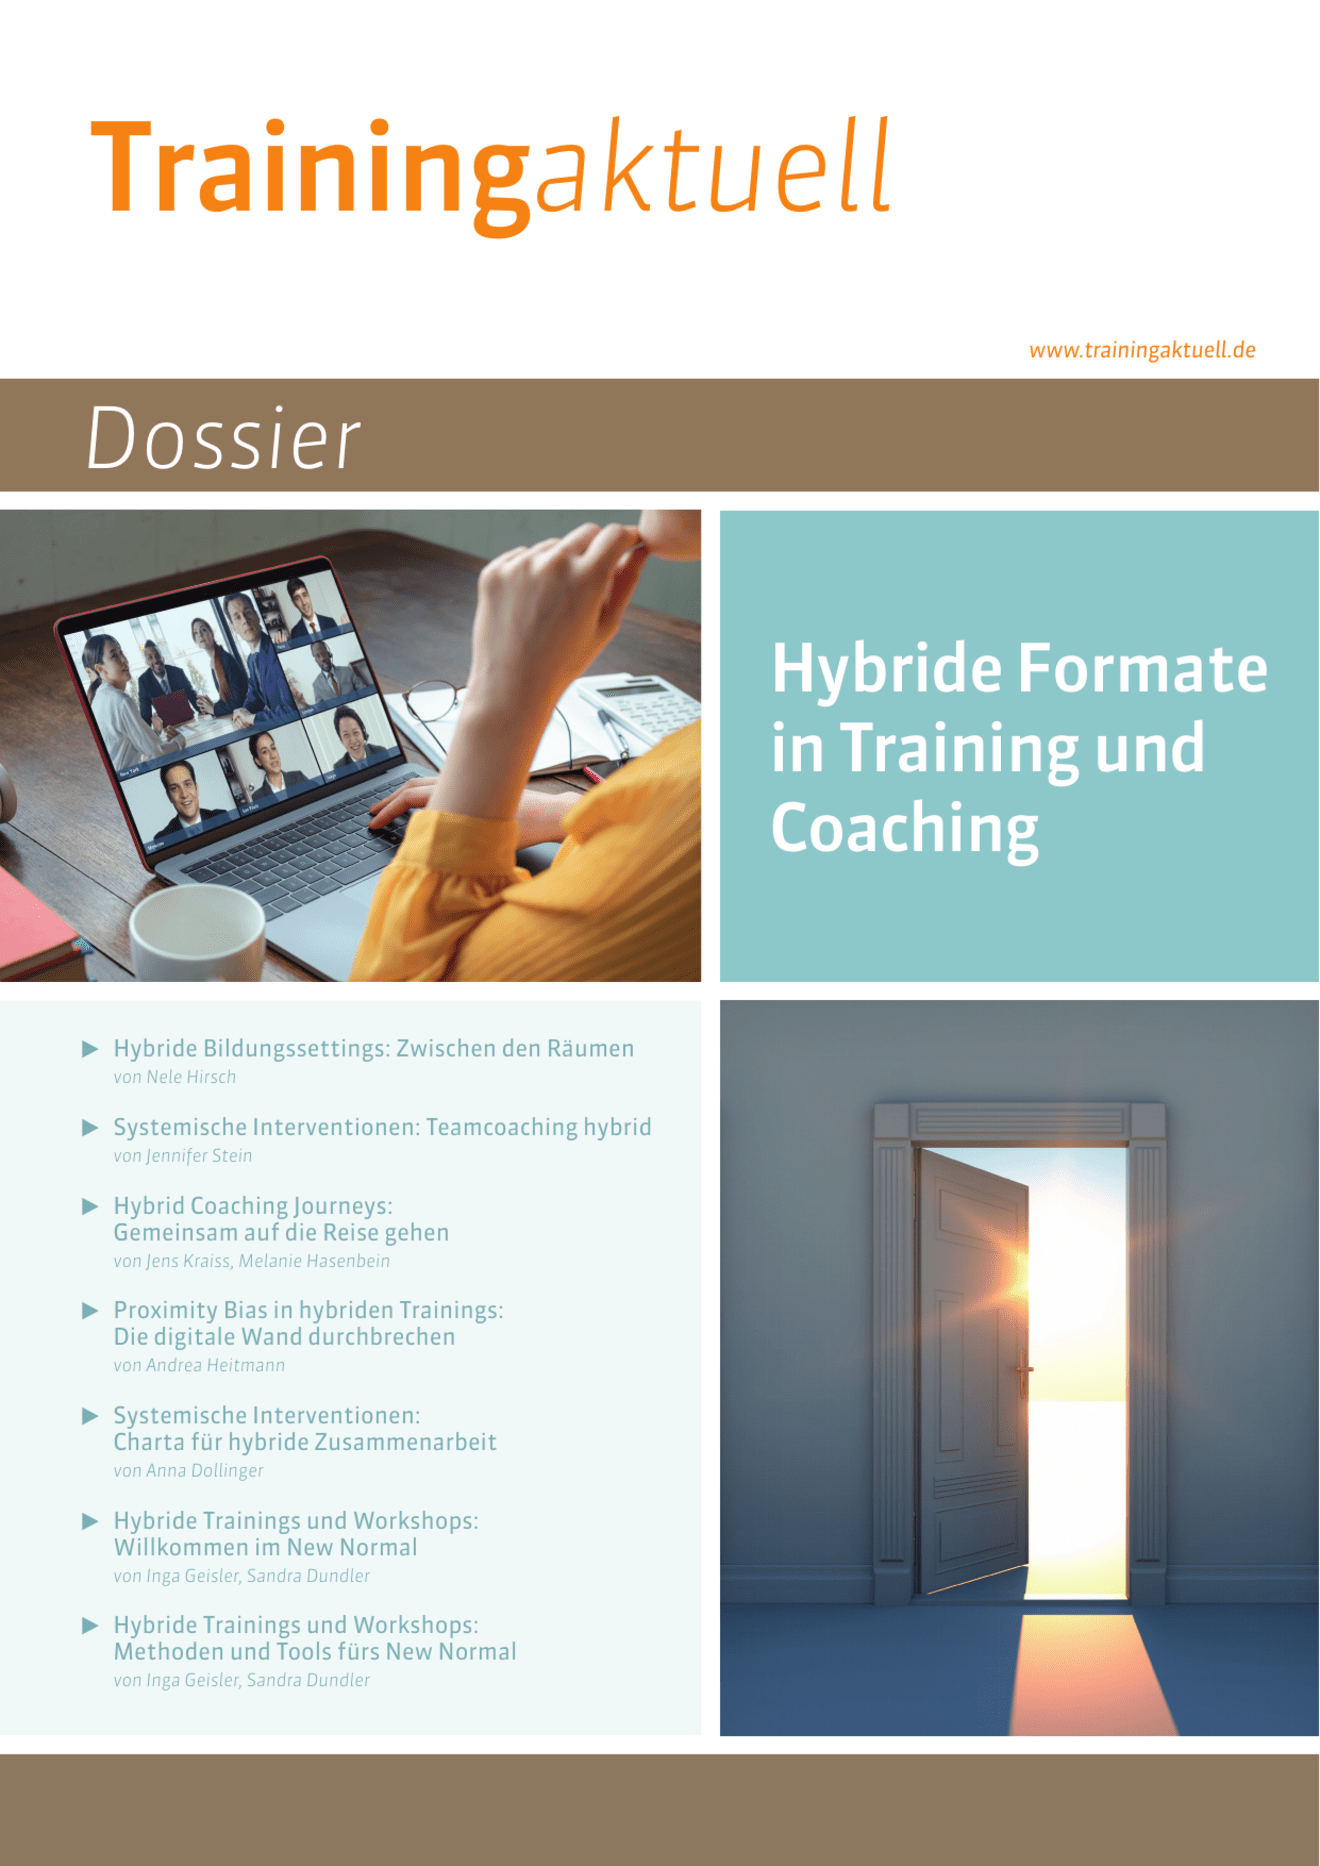 Dossier Hybride Formate in Training und Coaching